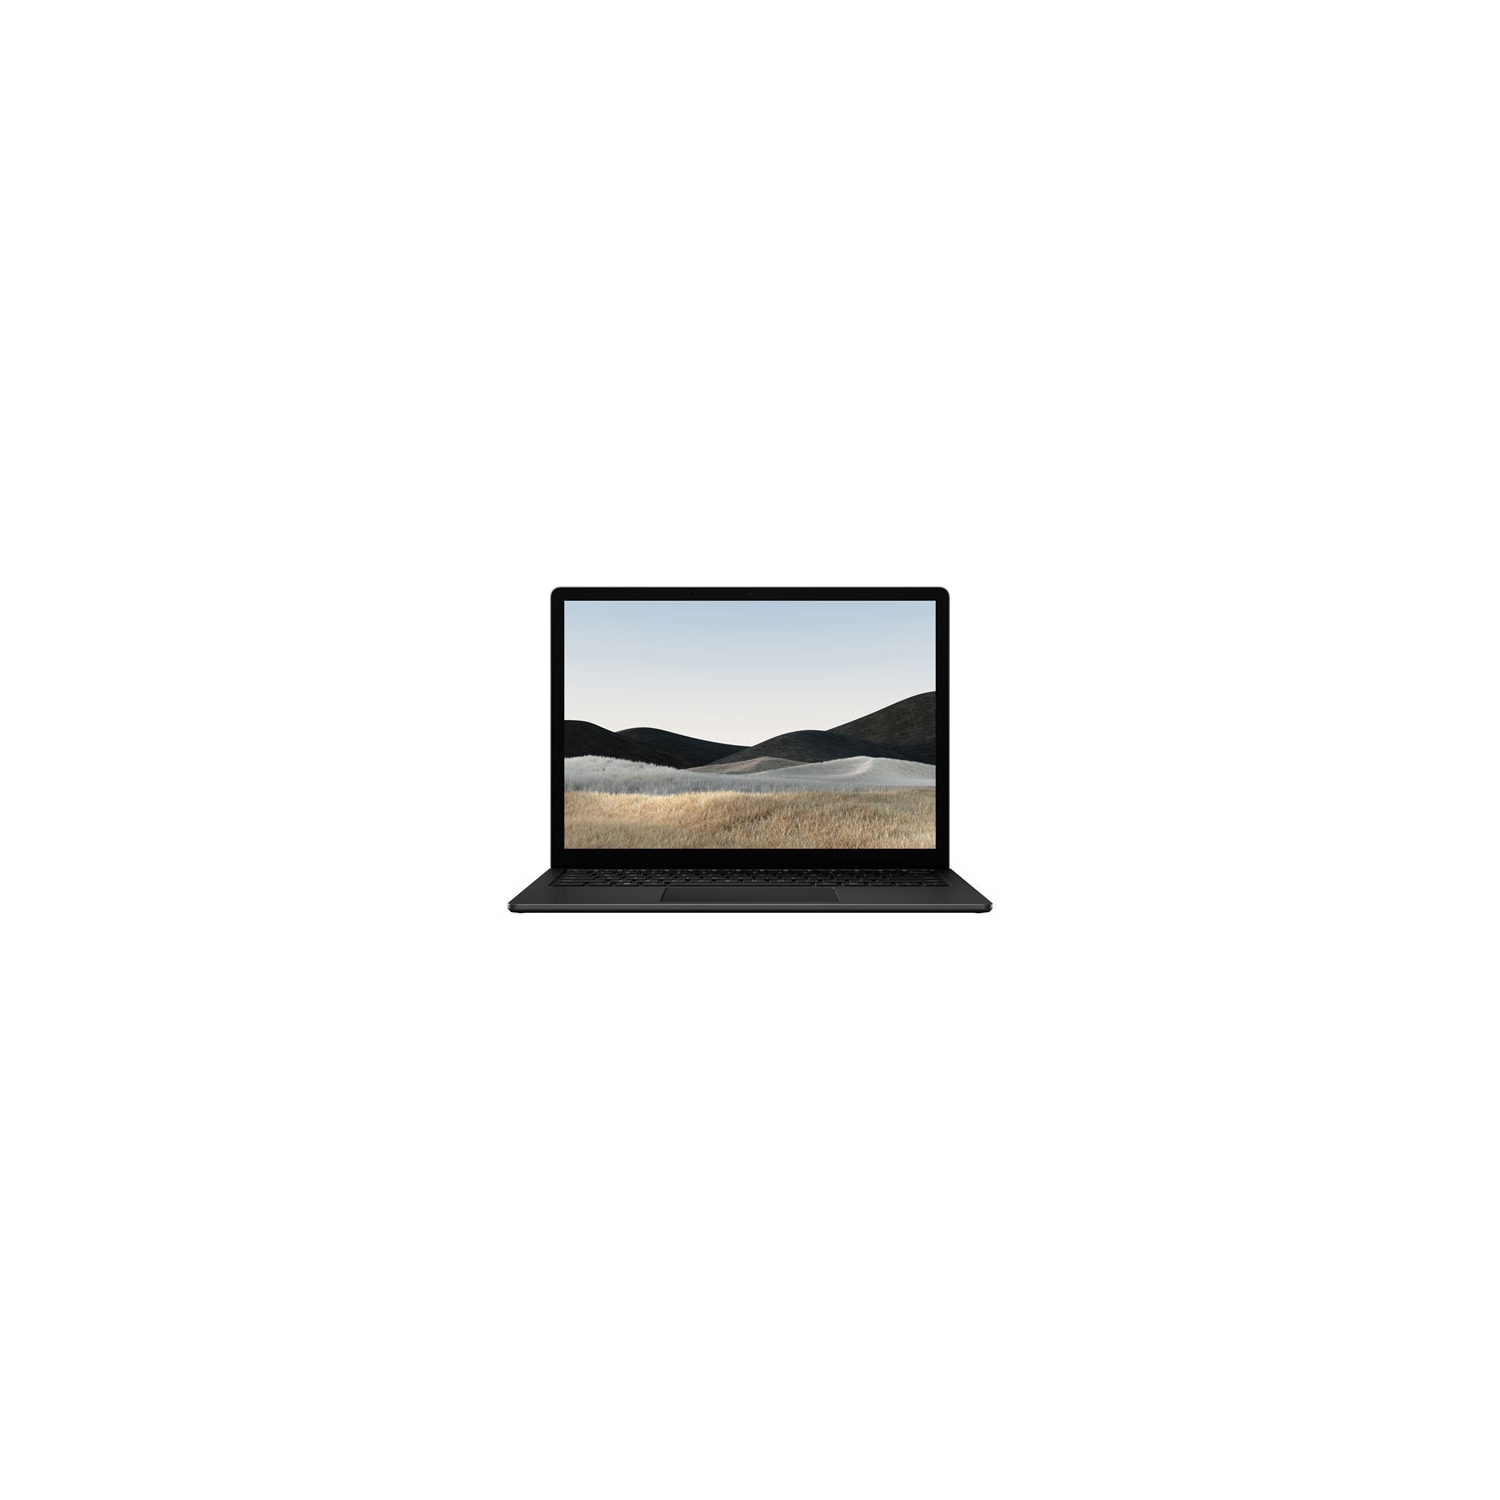 Microsoft Surface Laptop 4 13.5" - Matte Black (Intel Core i5-1135G7/512GB SSD/8GB RAM) -Eng - Open Box